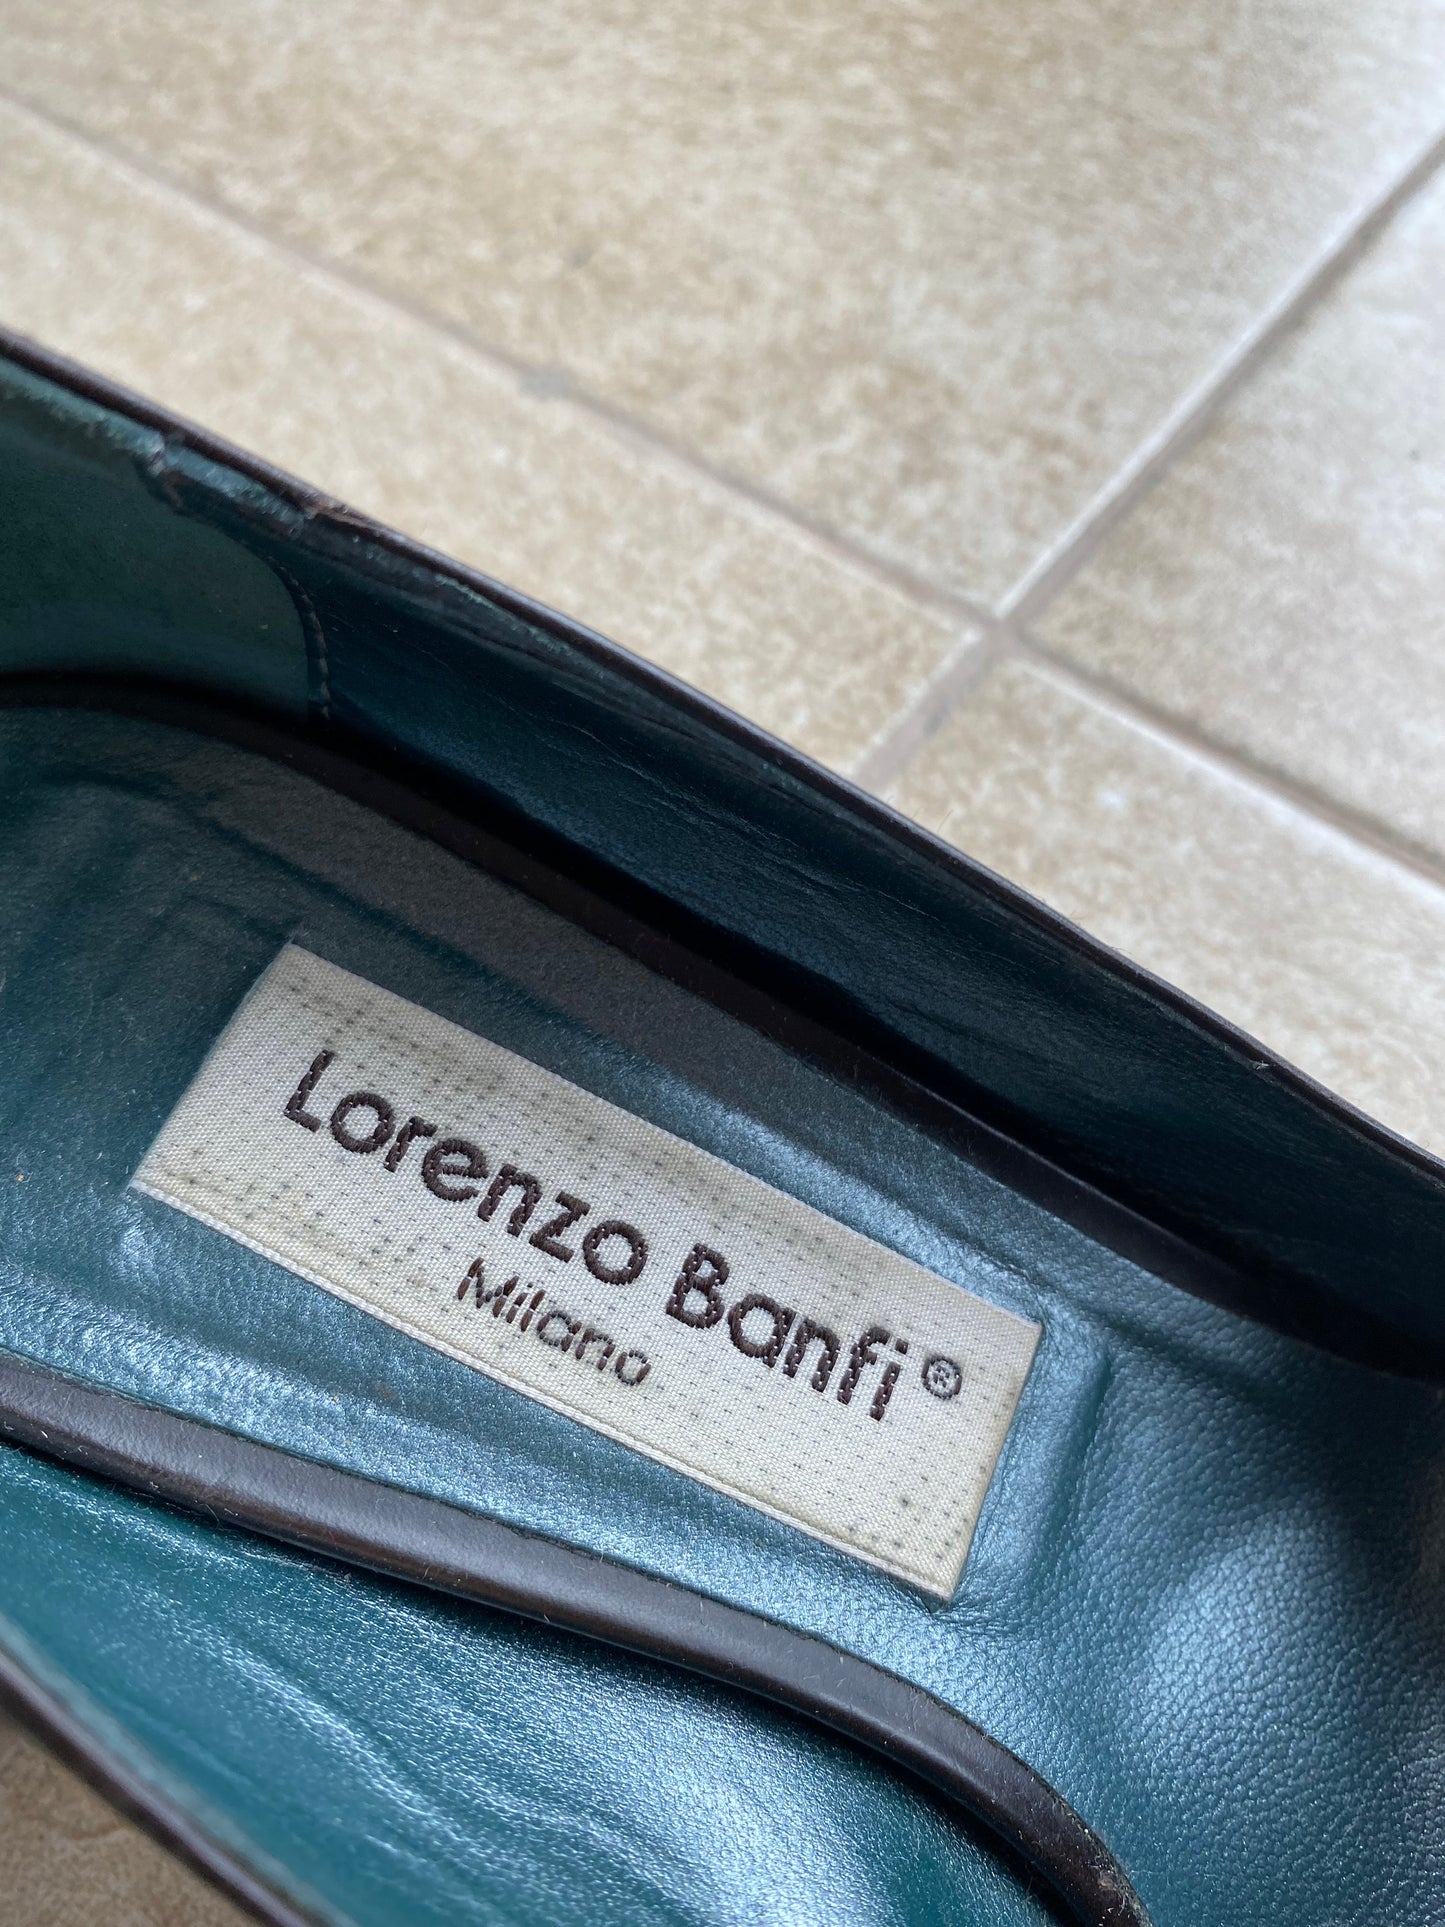 Décolleté Lorenzo Banfi